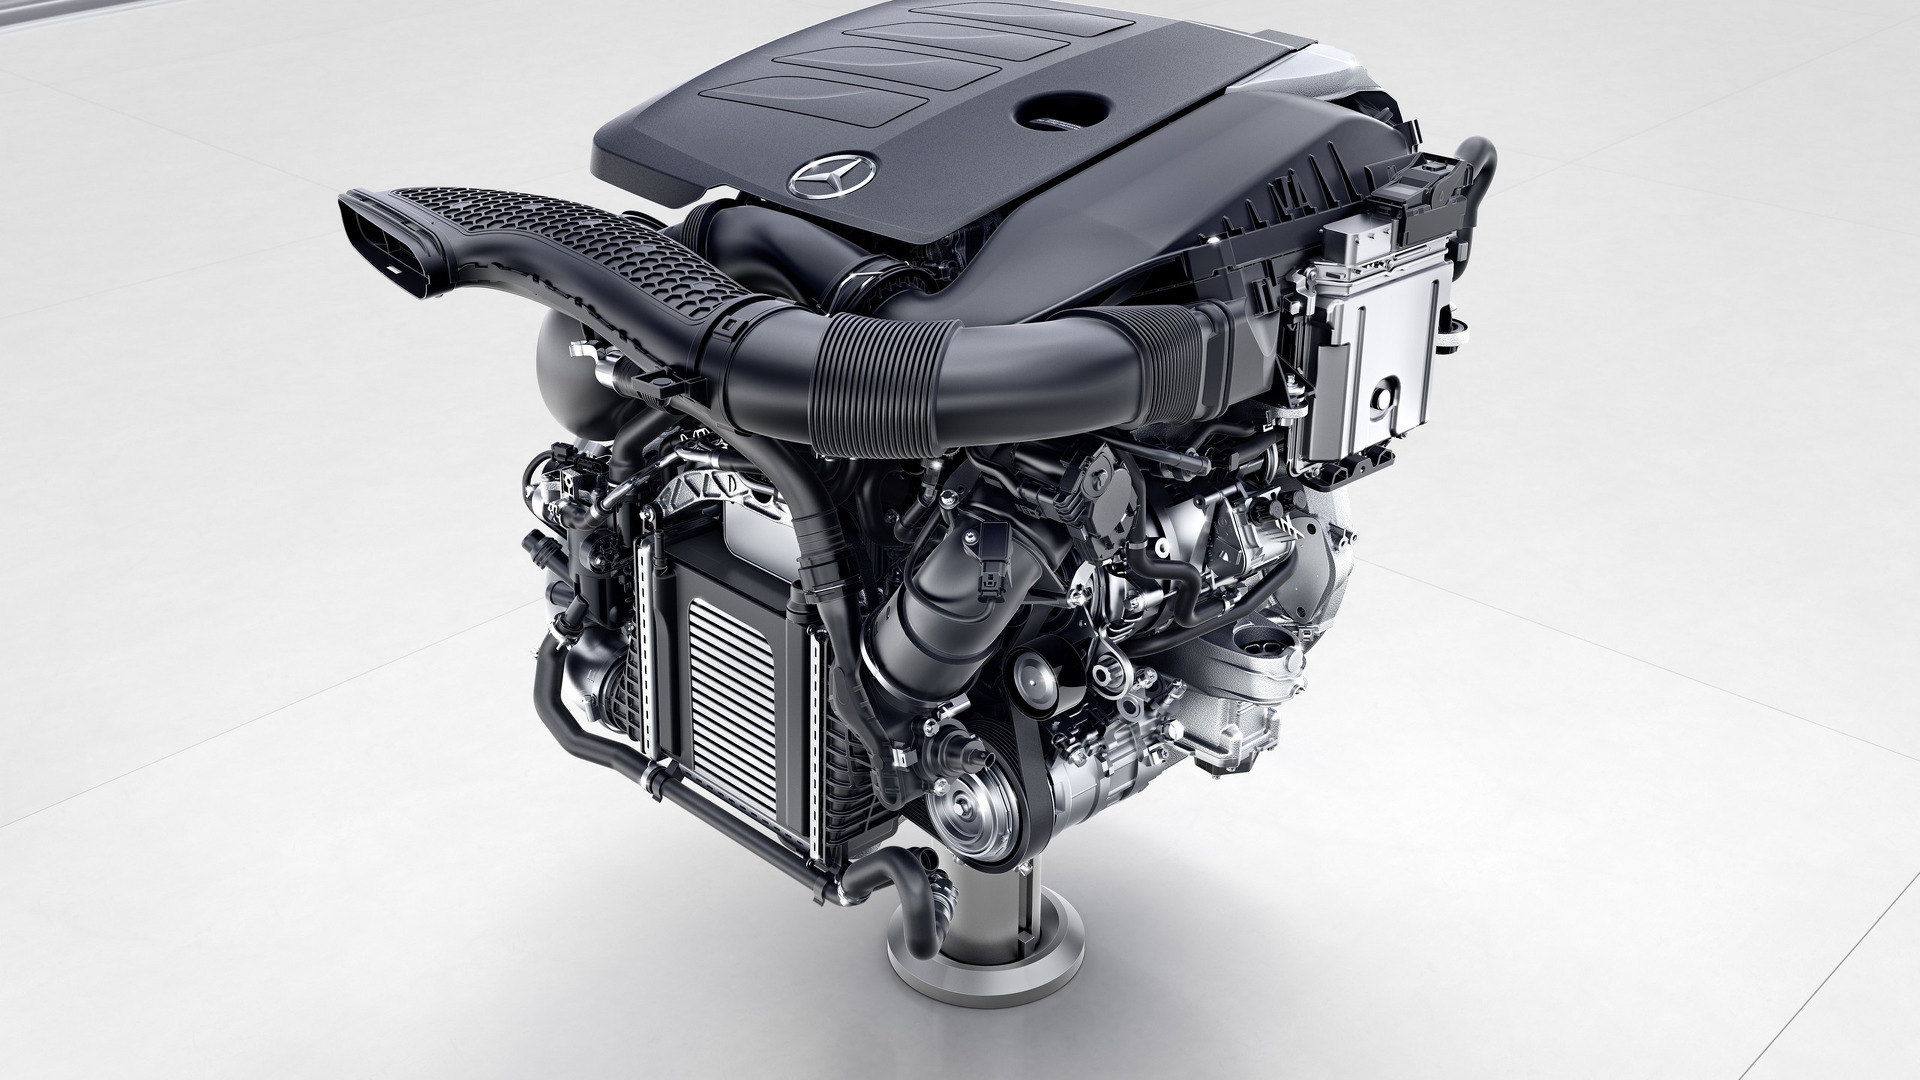 M264汽油引擎，2.0L四缸渦輪汽油引擎，採用雙渦流渦輪增壓與48V輔助馬達，擁有268hp的輸出水準